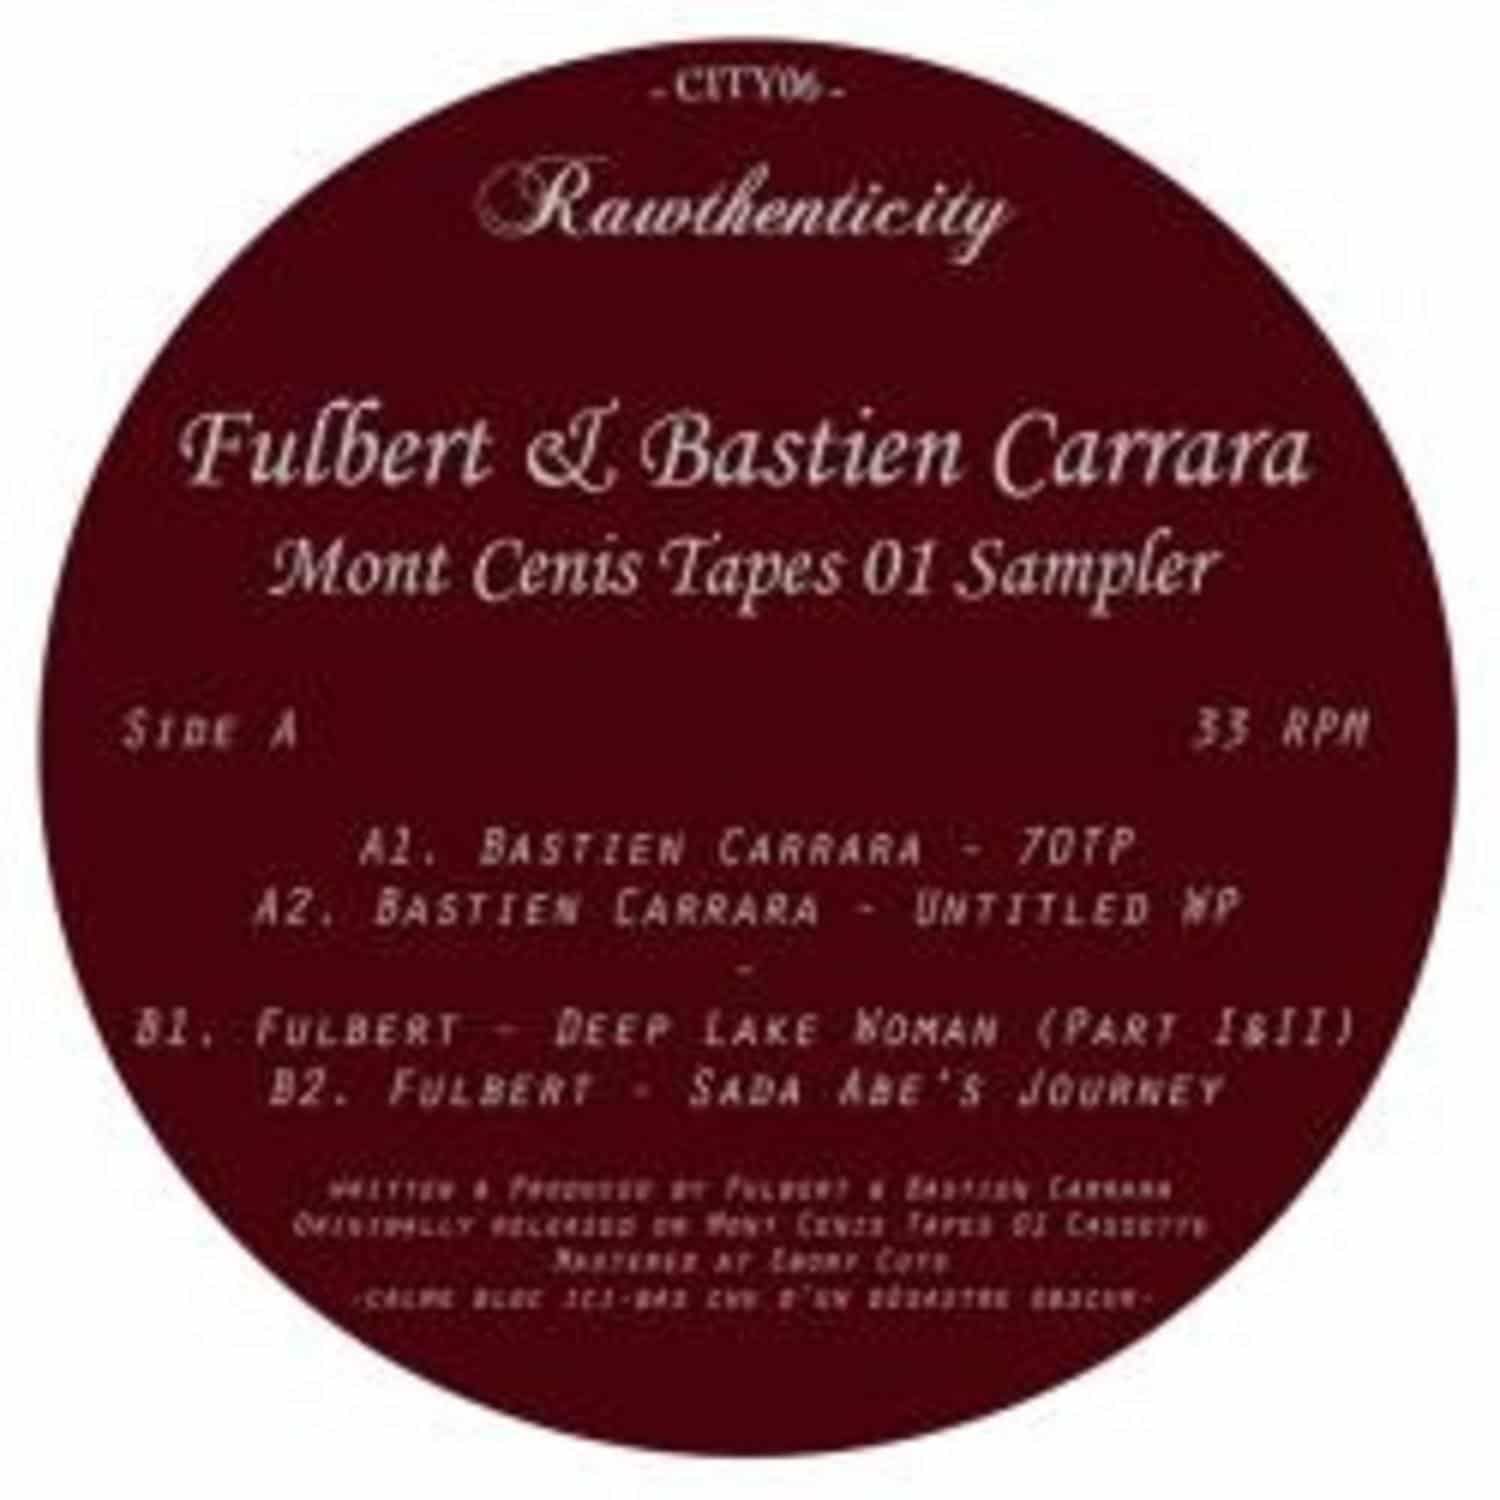 Fulbert & Bastien Carrara - MONT CENIS TAPES 01 SAMPLER